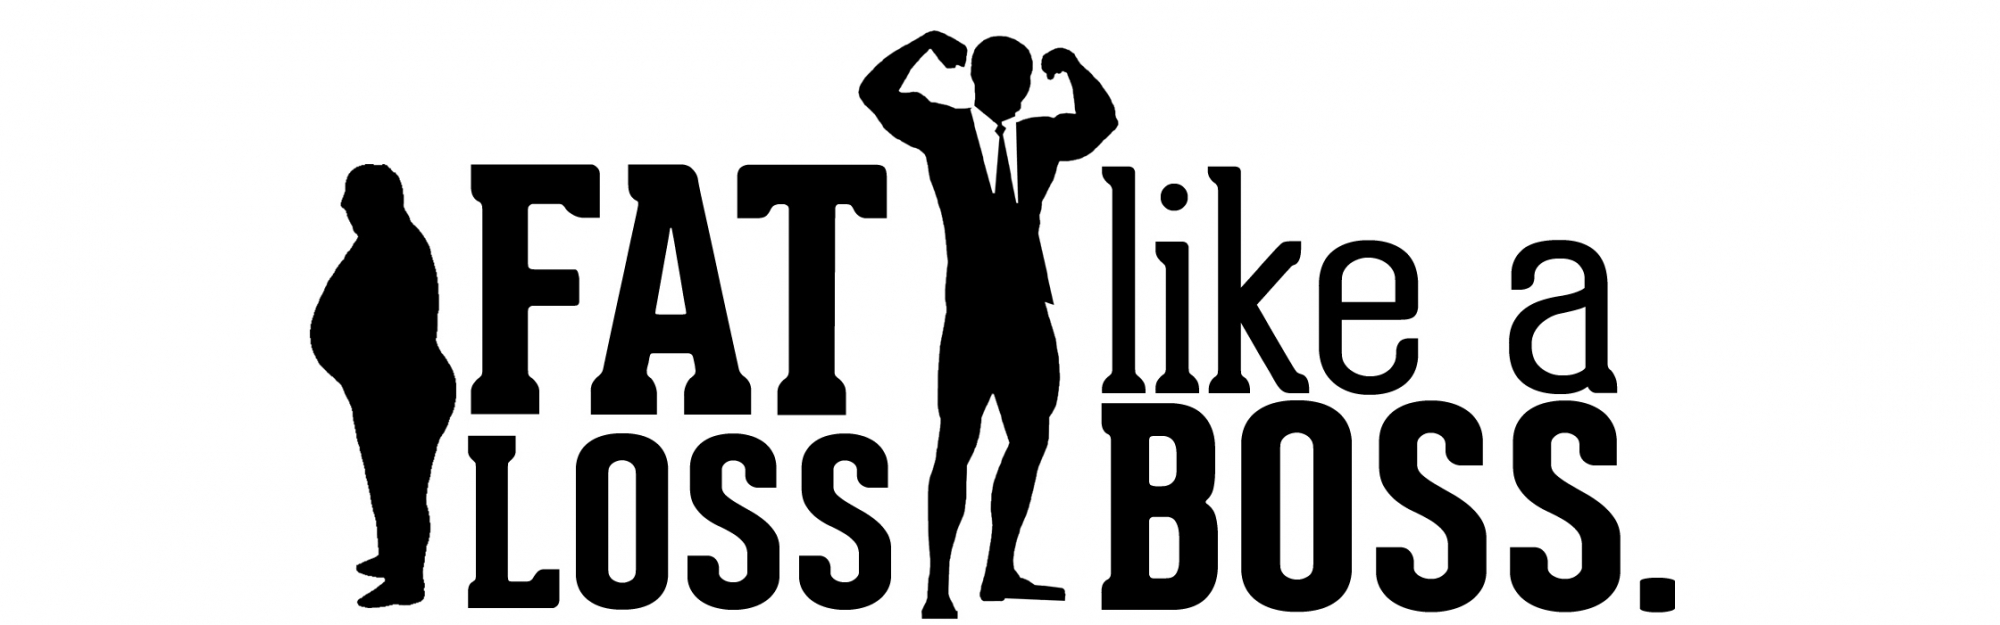 like a boss logo 08